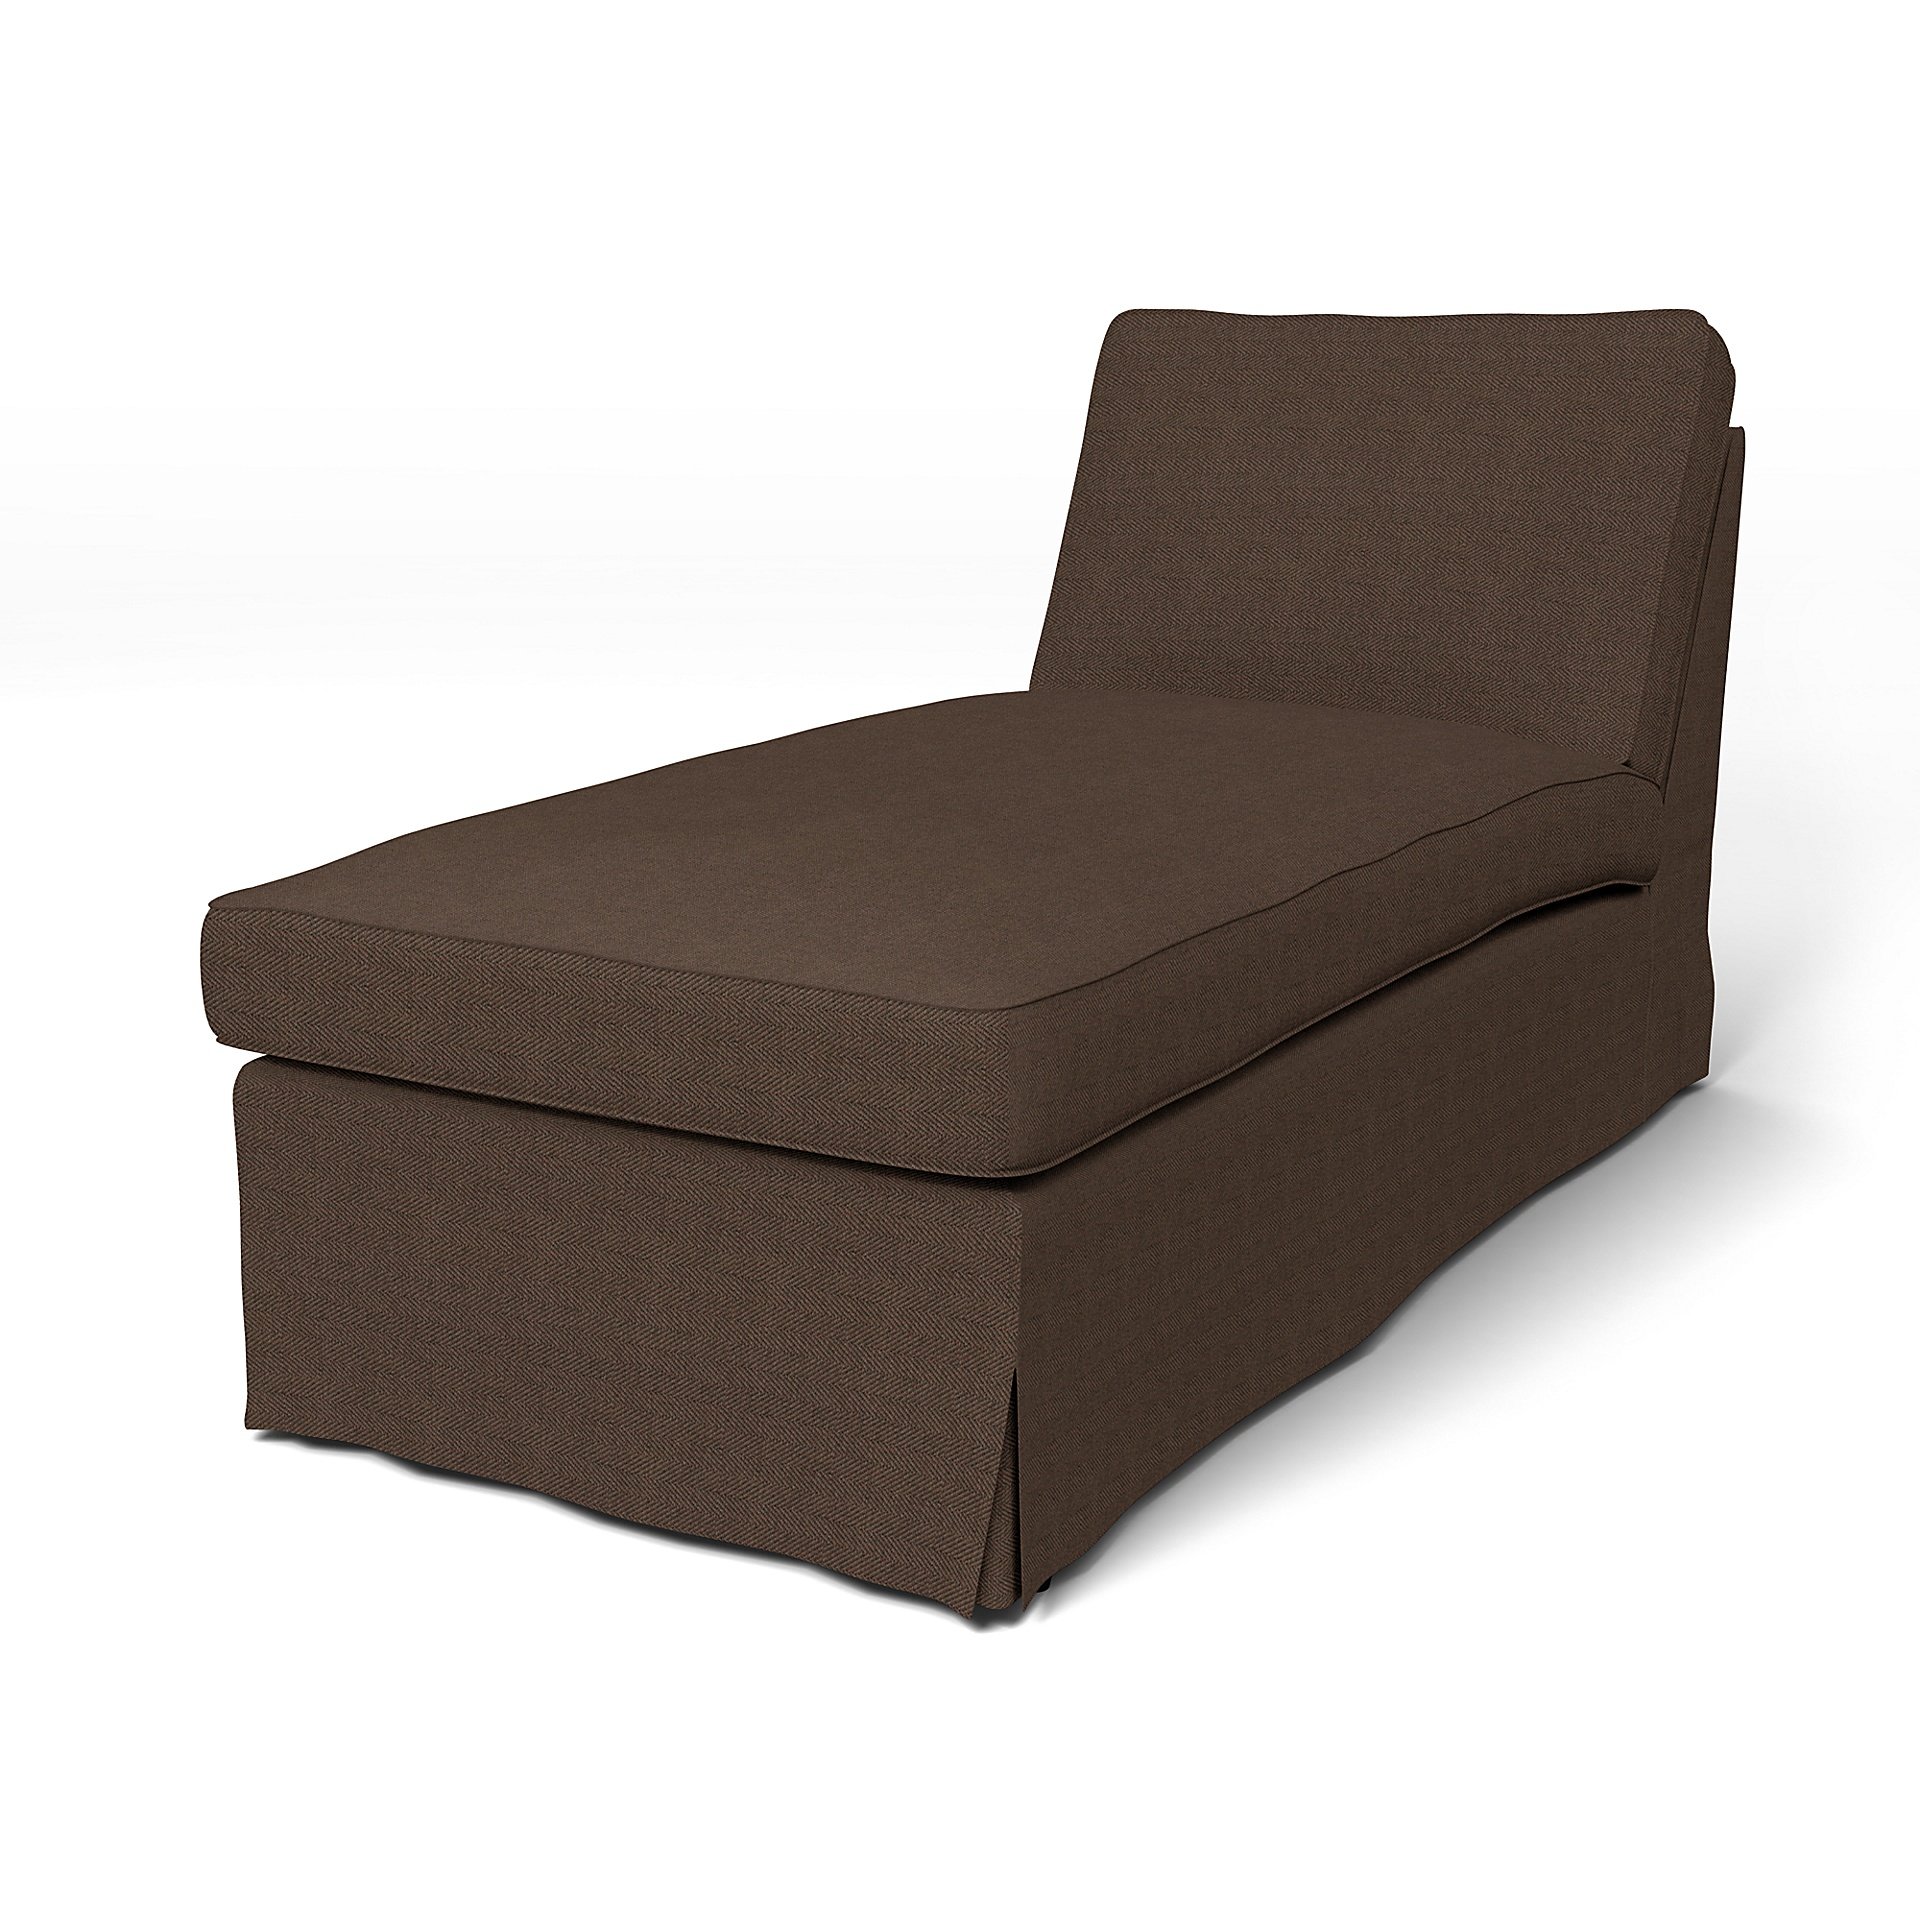 IKEA - Ektorp Chaise Longue Cover, Chocolate, Boucle & Texture - Bemz